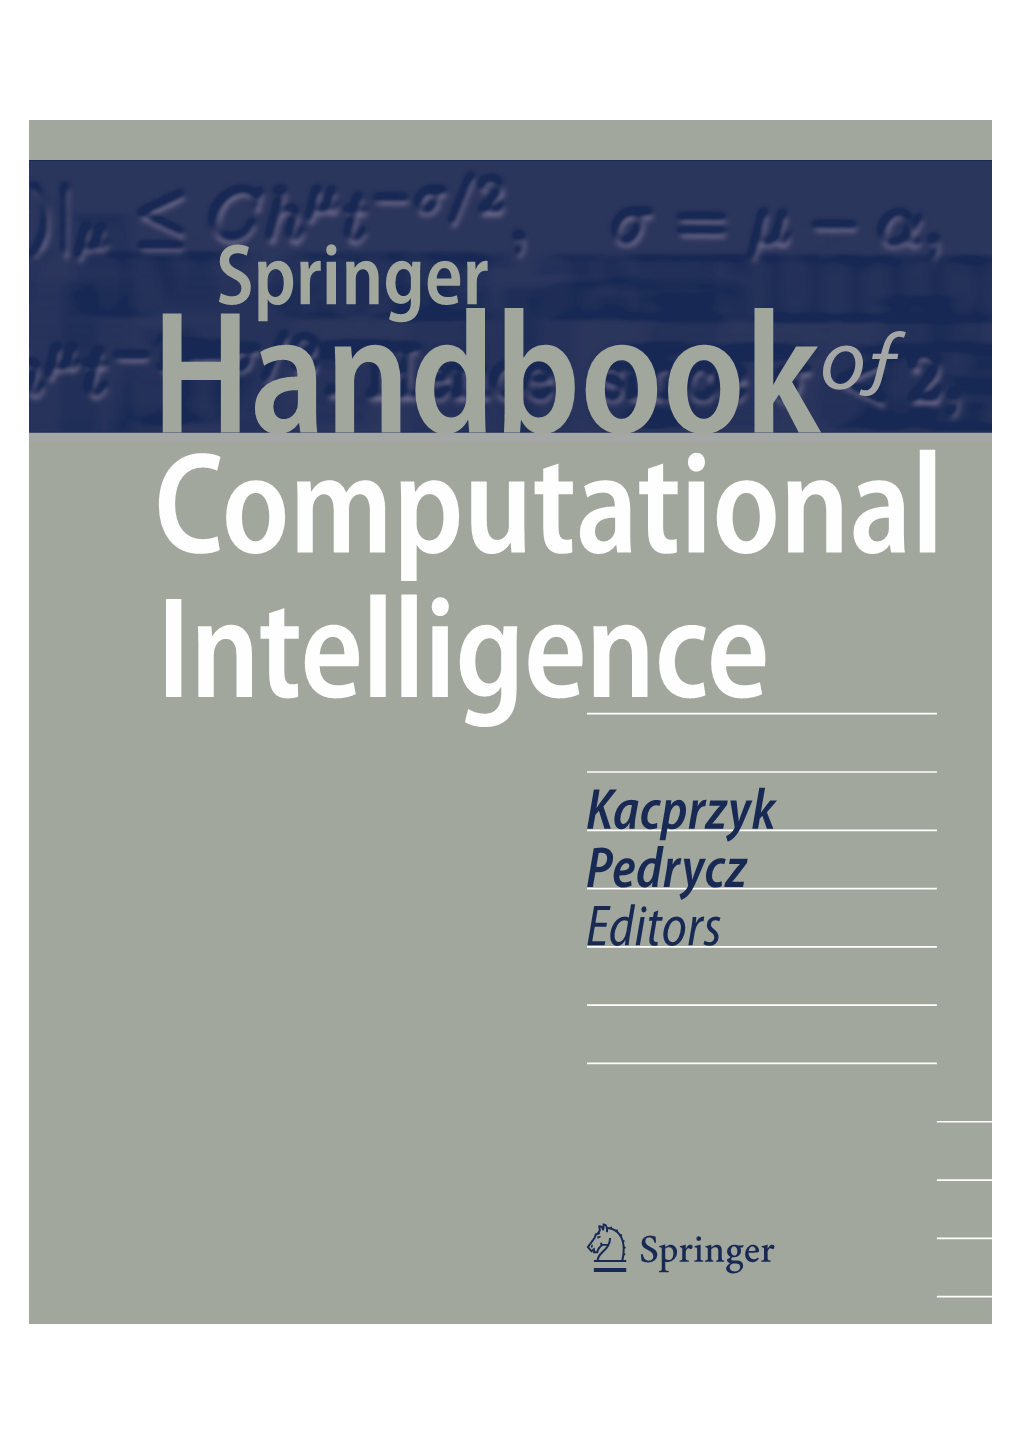 Springer Handbookoƒ Computational Intelligence Kacprzyk Pedrycz Editors